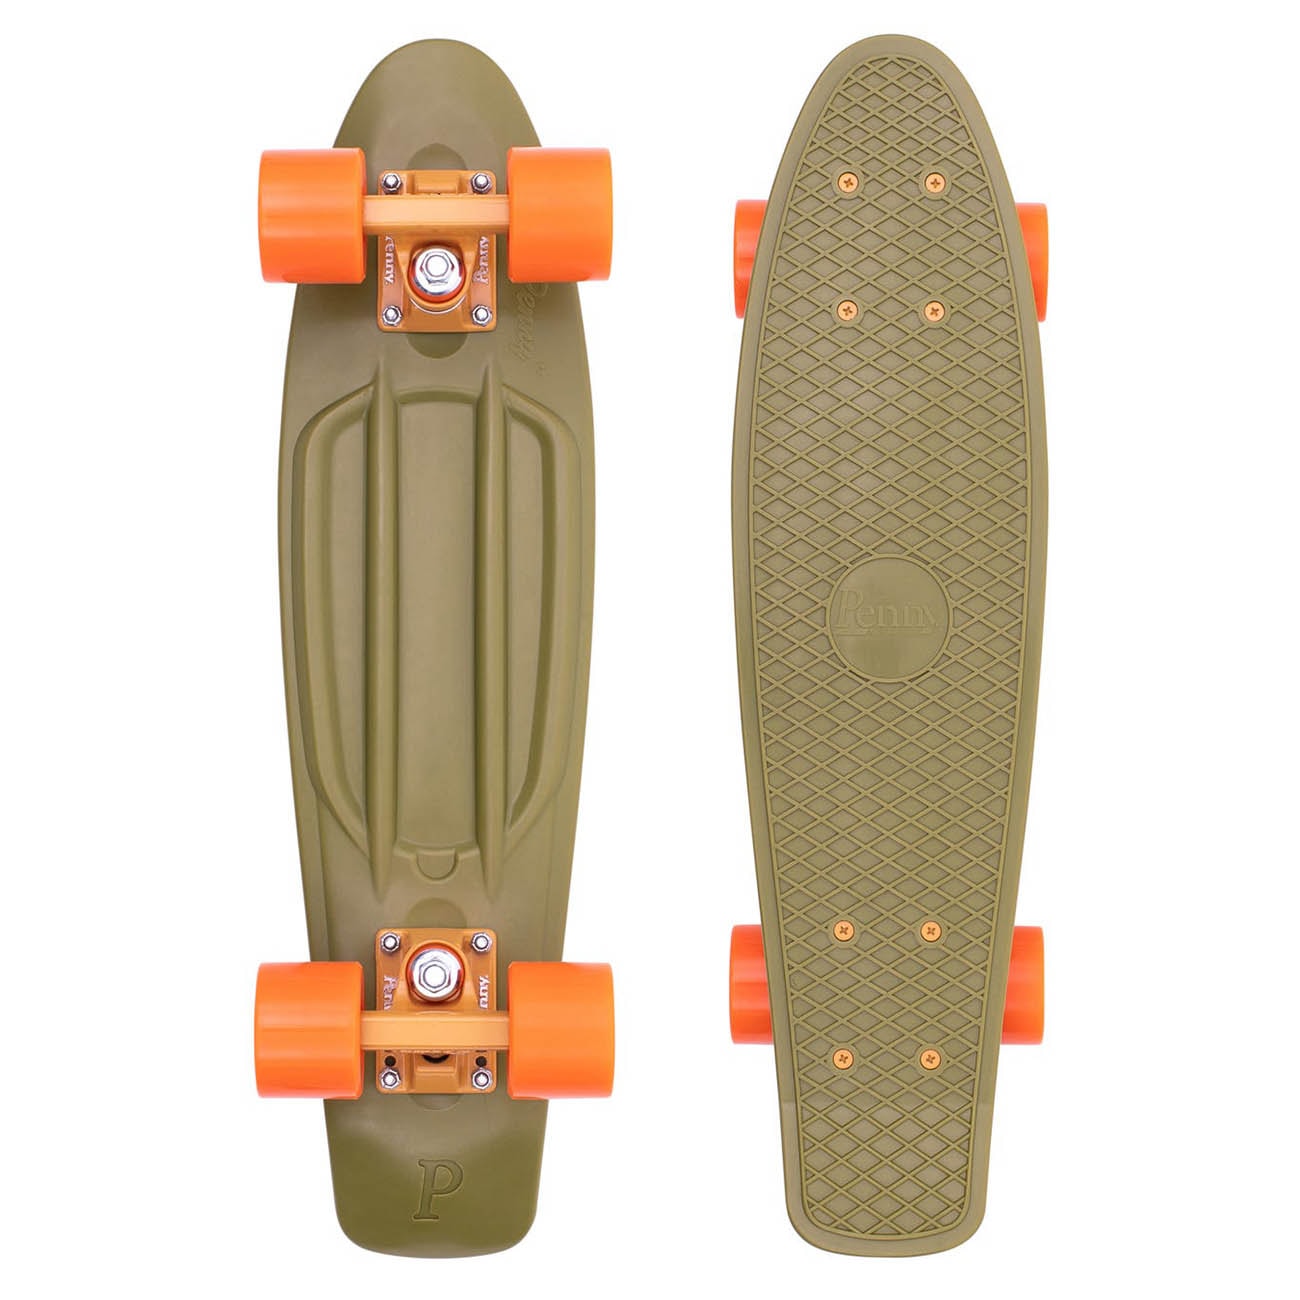 PENNY skateboard（ペニースケートボード）22inch CLASSICS BURNT OLIVE - shapefm.dk